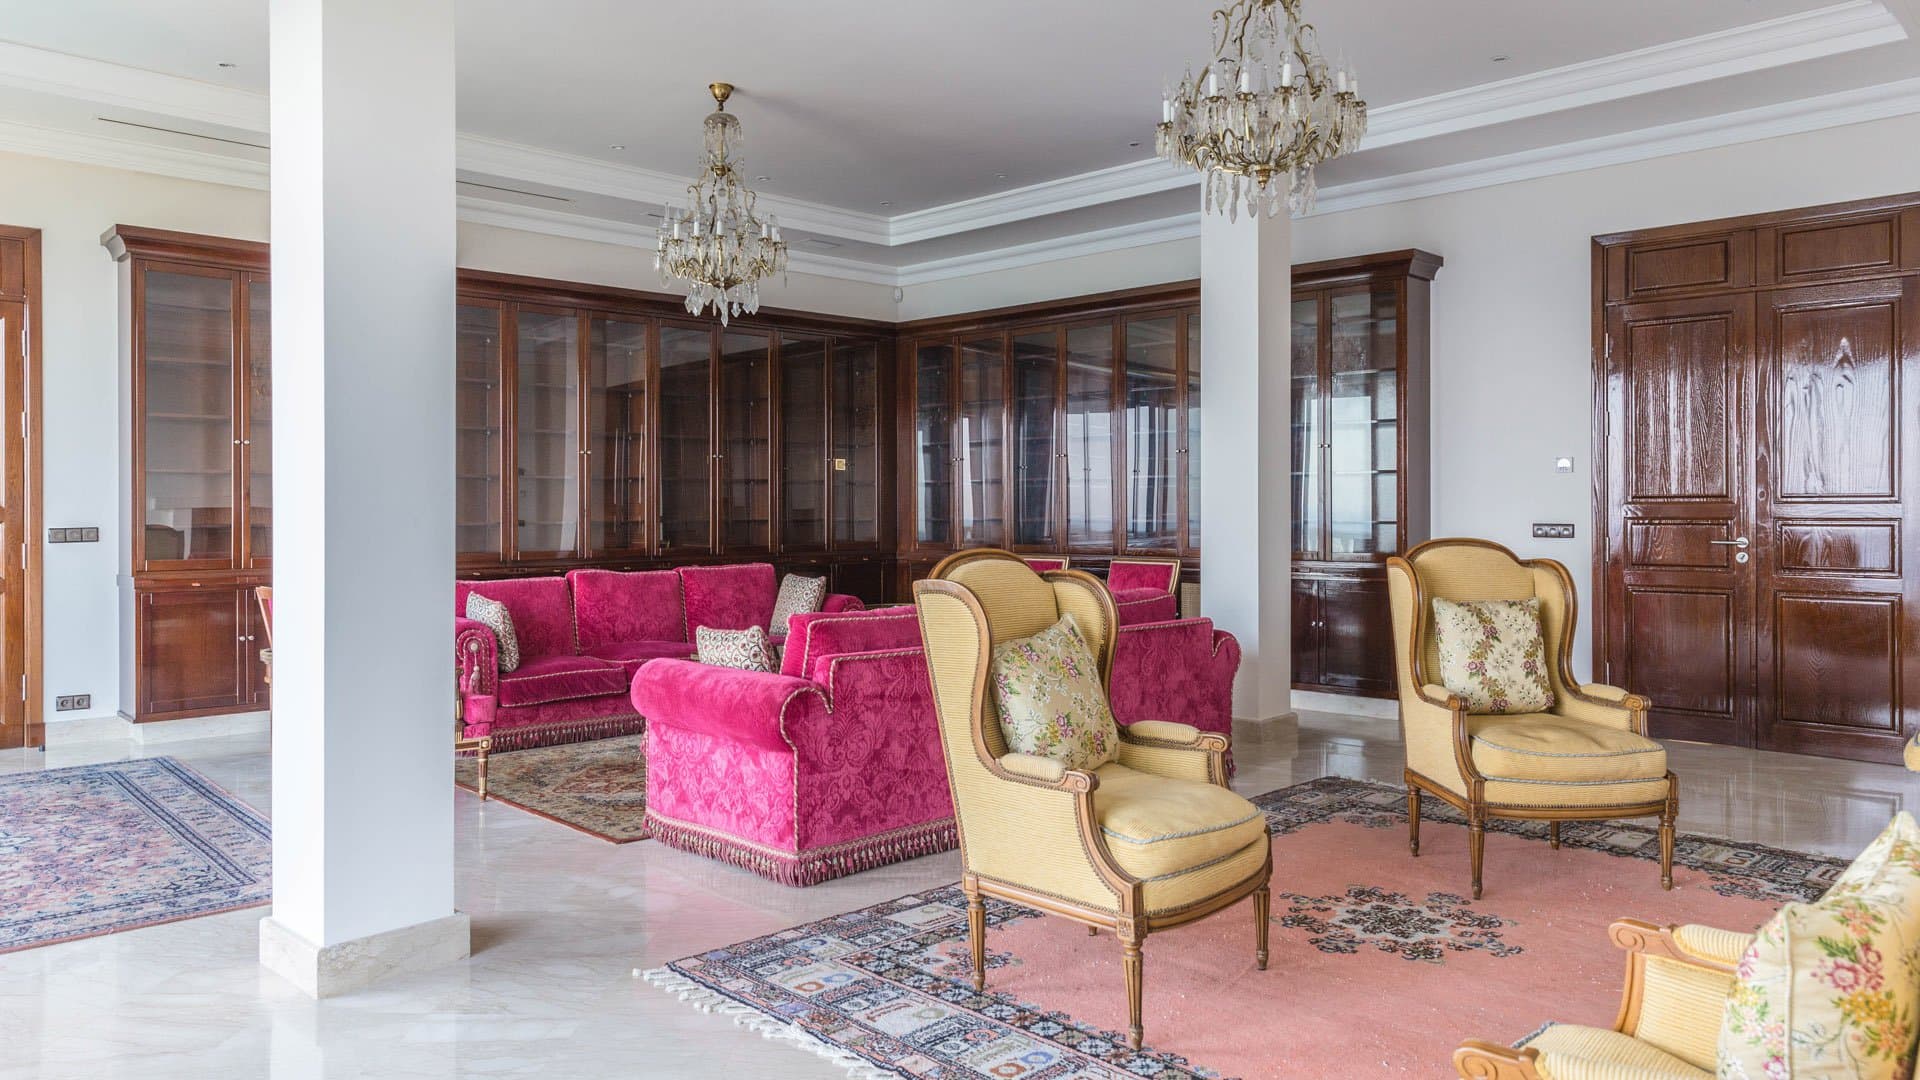 6 Bedroom Villa For Sale Marrakech Lp08699 137d7d1443ea0100.jpg